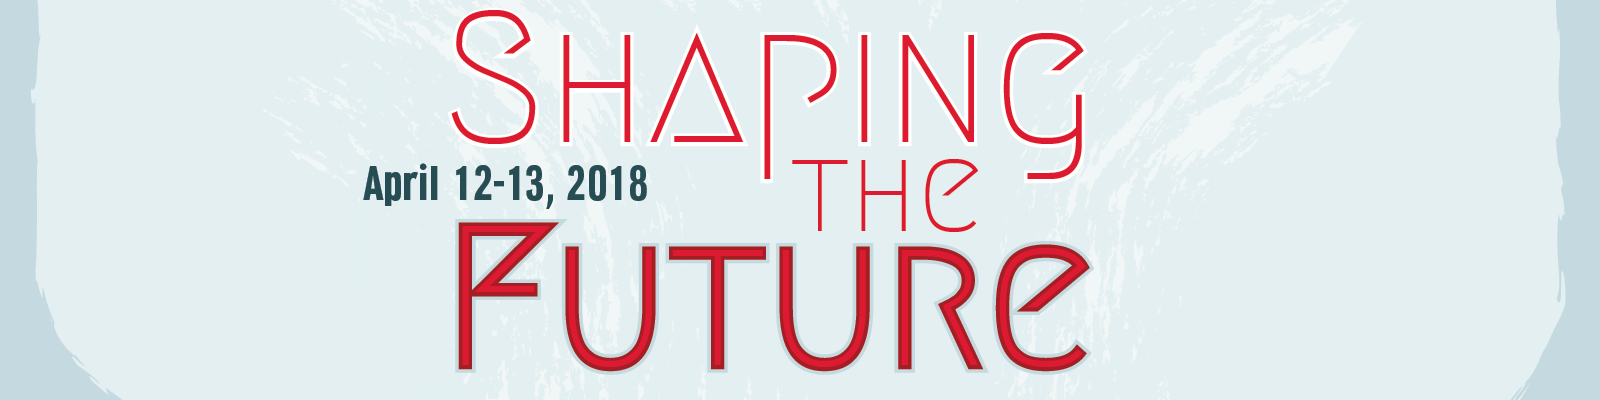 Nebraska Forum on Digital Humanities 2018: Shaping the Future